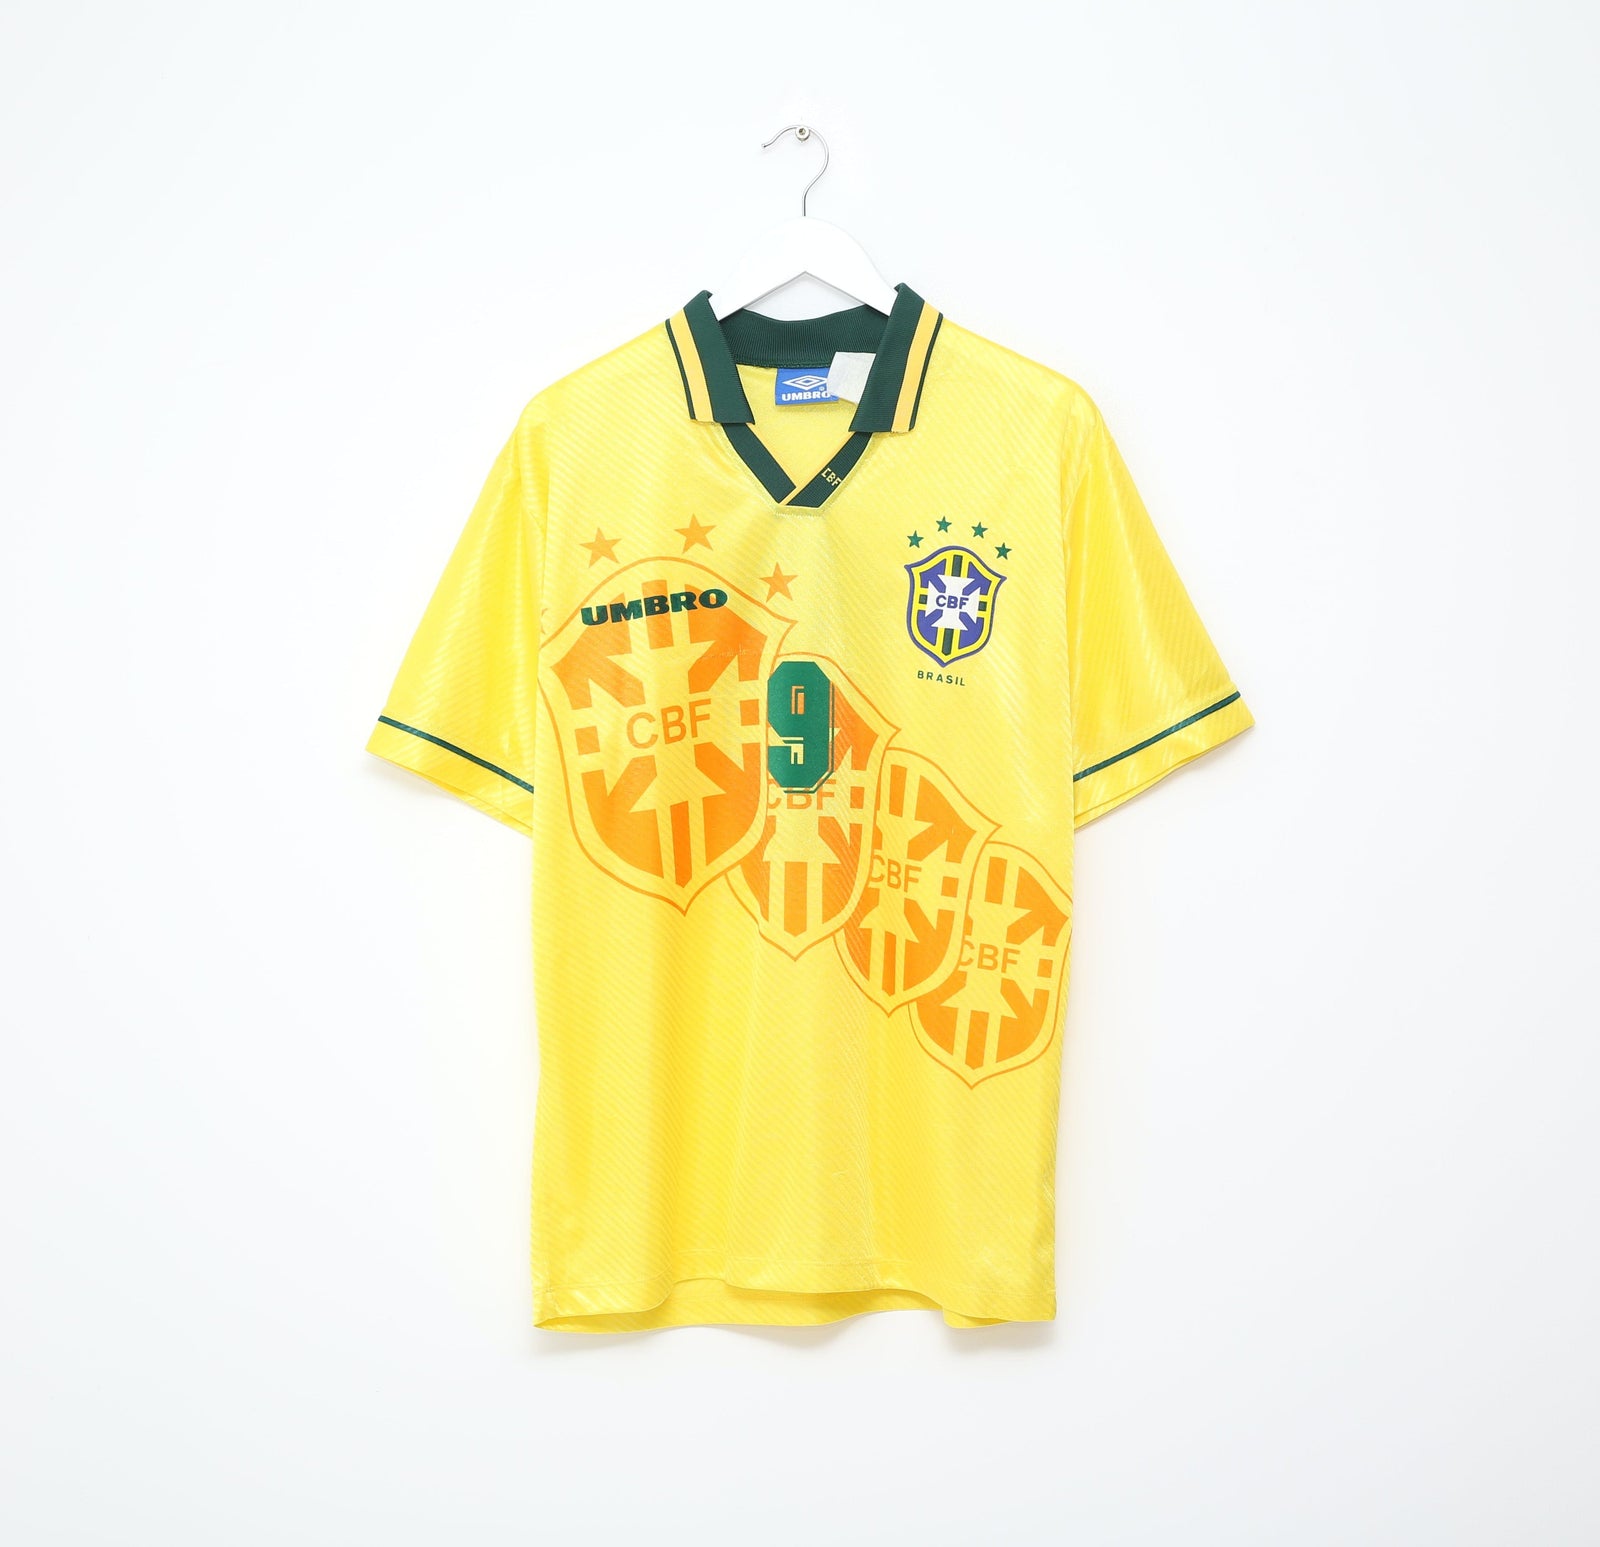 Brazil 1994 - 1995 men's home football shirt jersey camiseta Umbro size M -  L